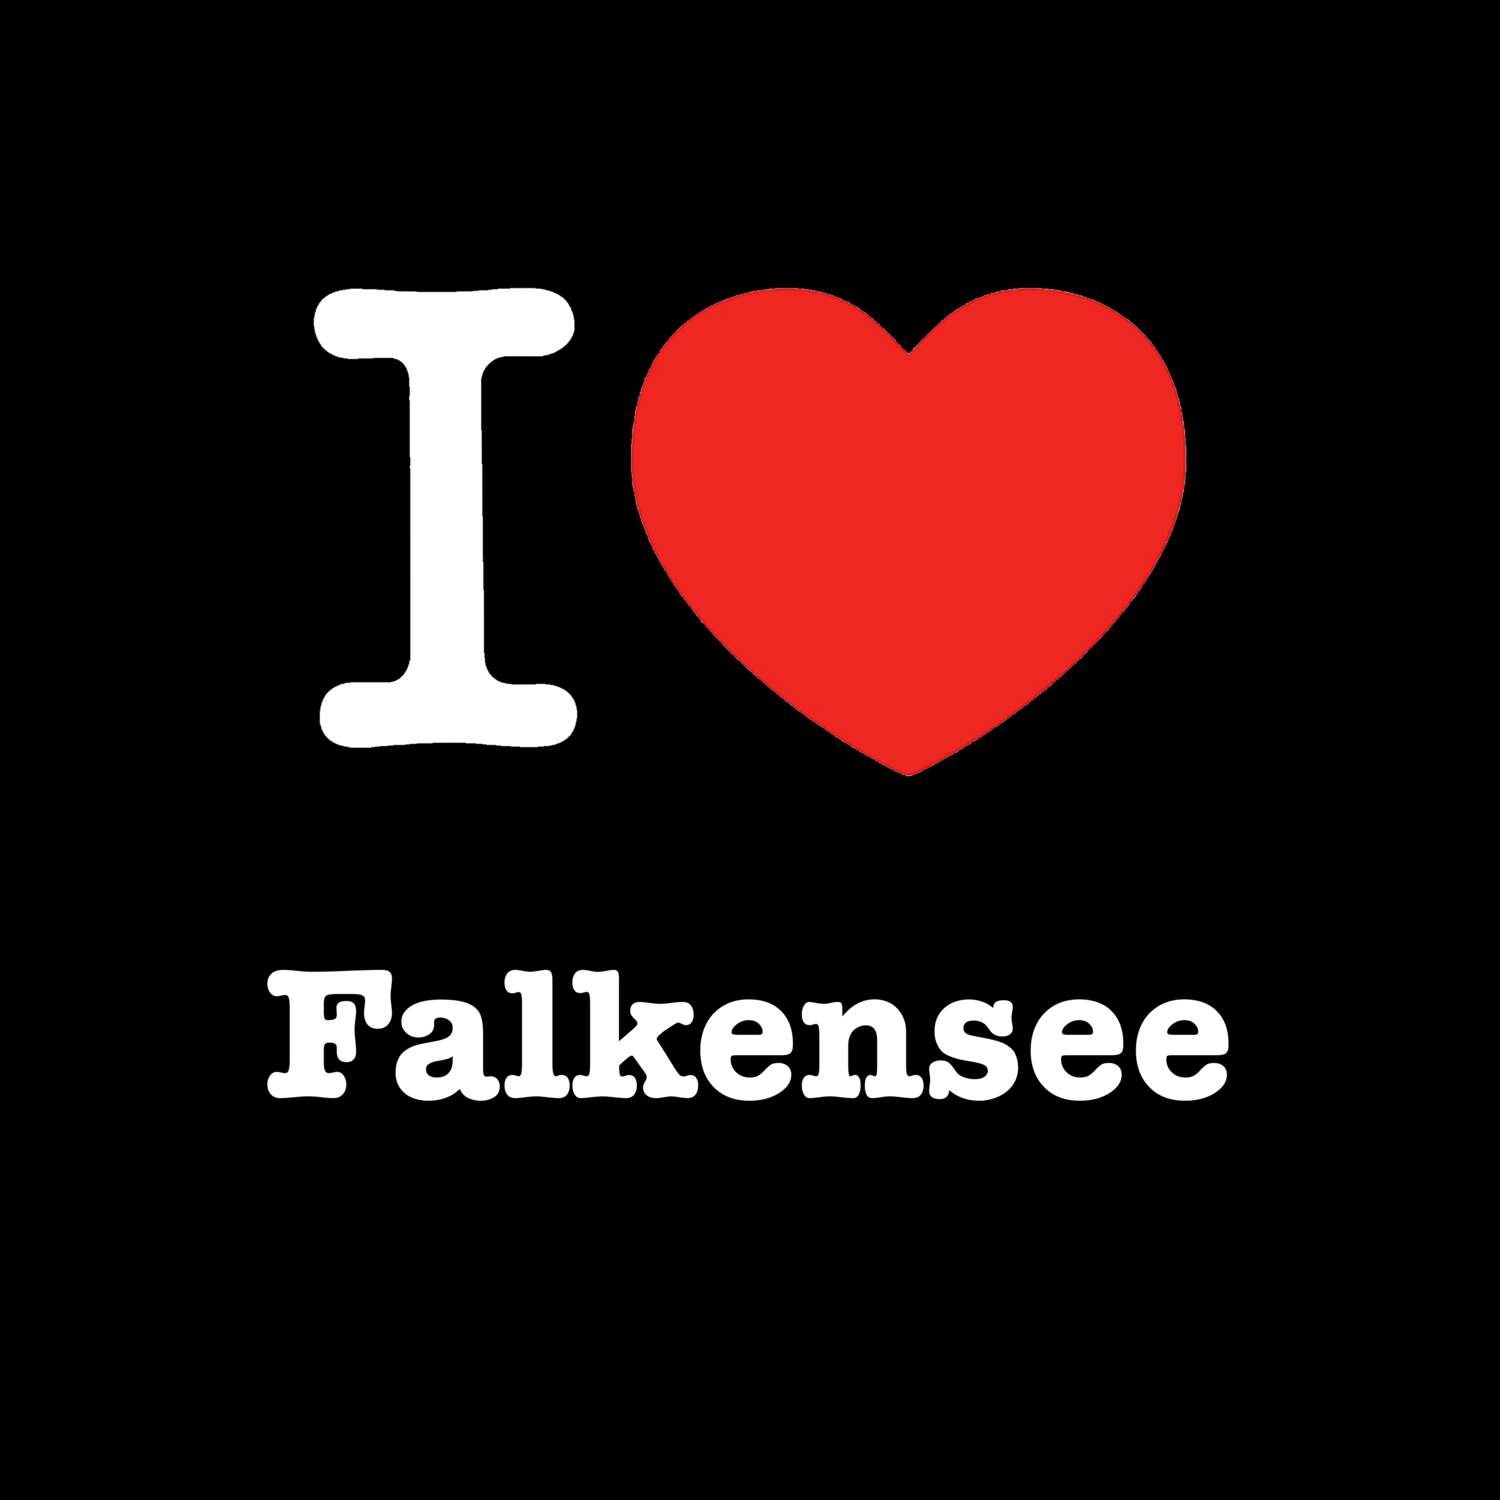 Falkensee T-Shirt »I love«